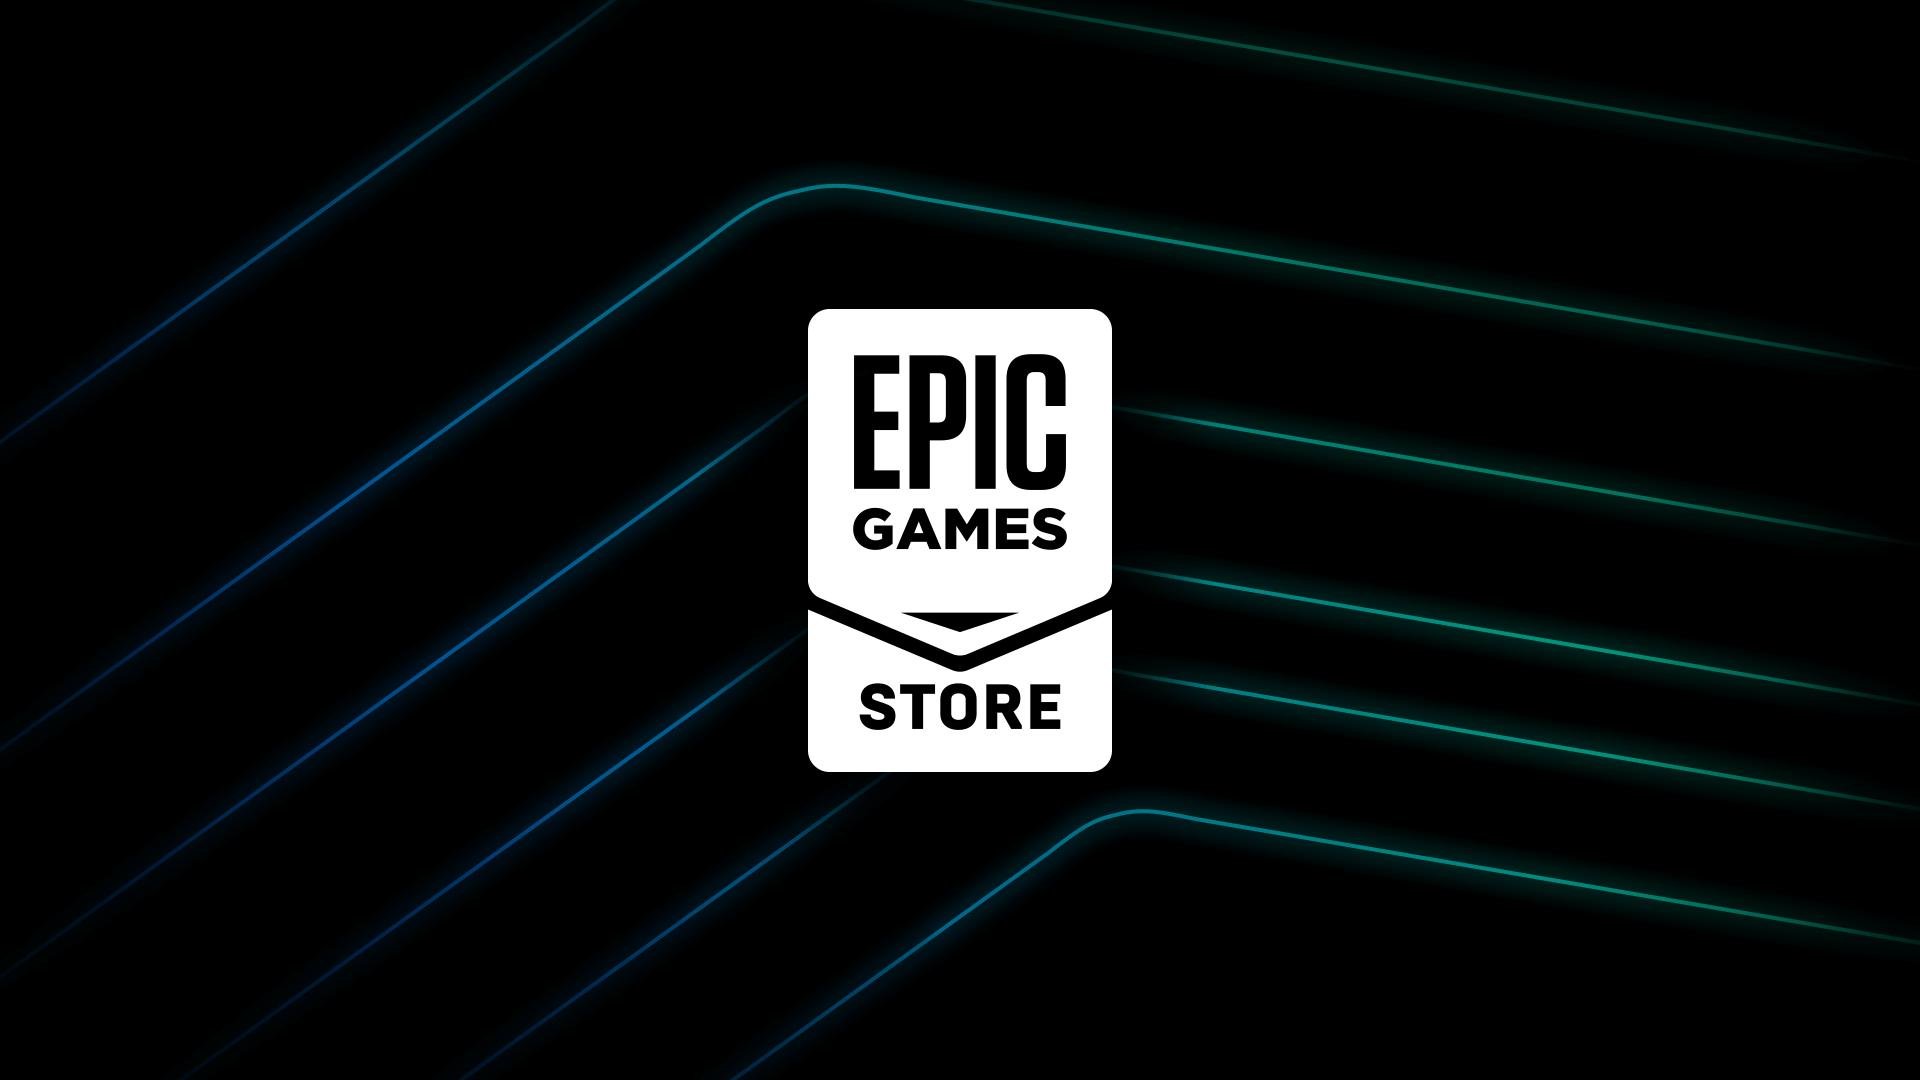 A epic games vai presentear 15 jogos no natal totalmente gratis, e eu